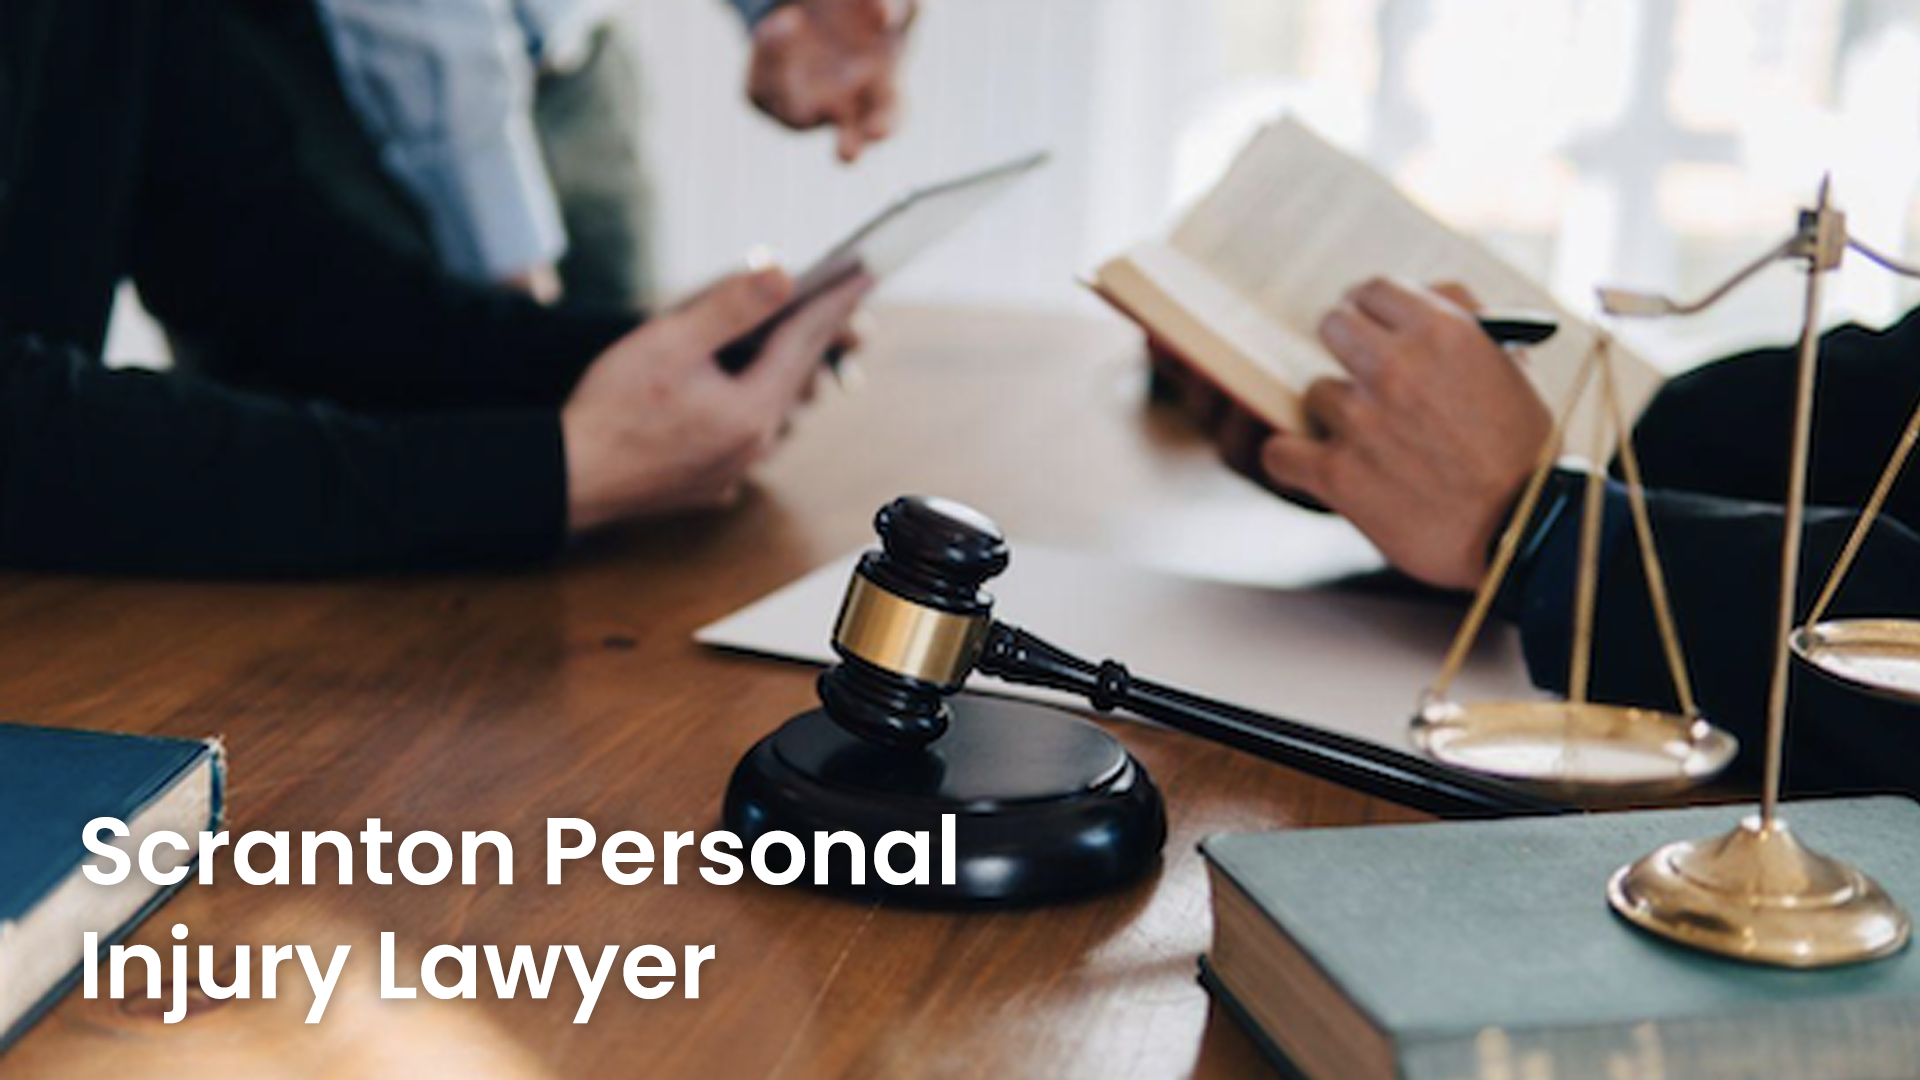 Scranton Personal Injury Lawyer: Navigating the Maze of Legal Representation